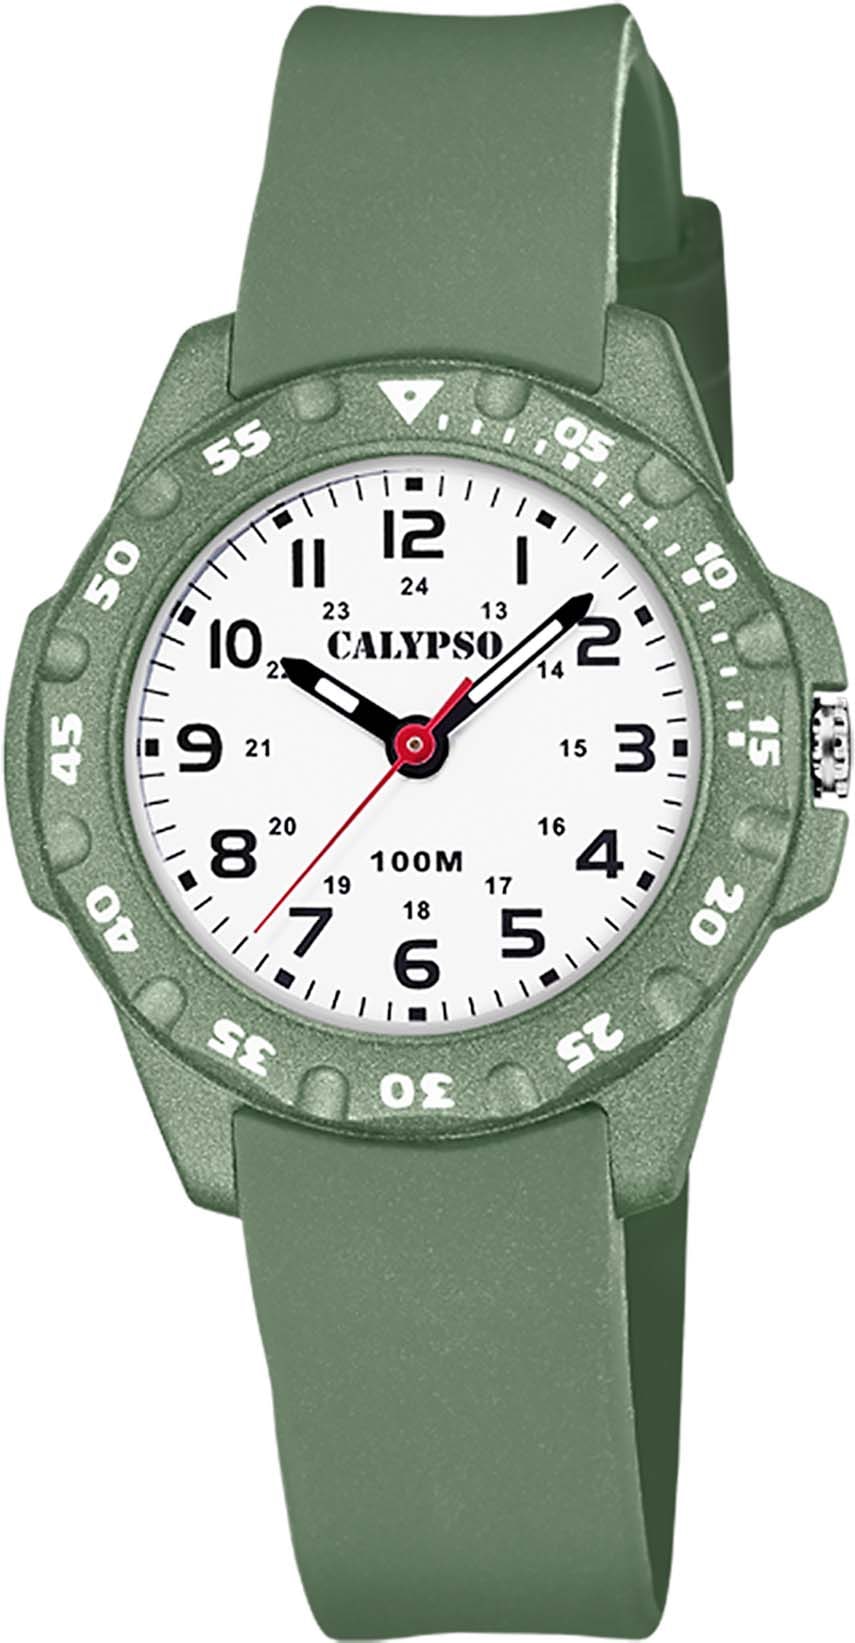 Armbanduhren grün kaufen » I'm walking